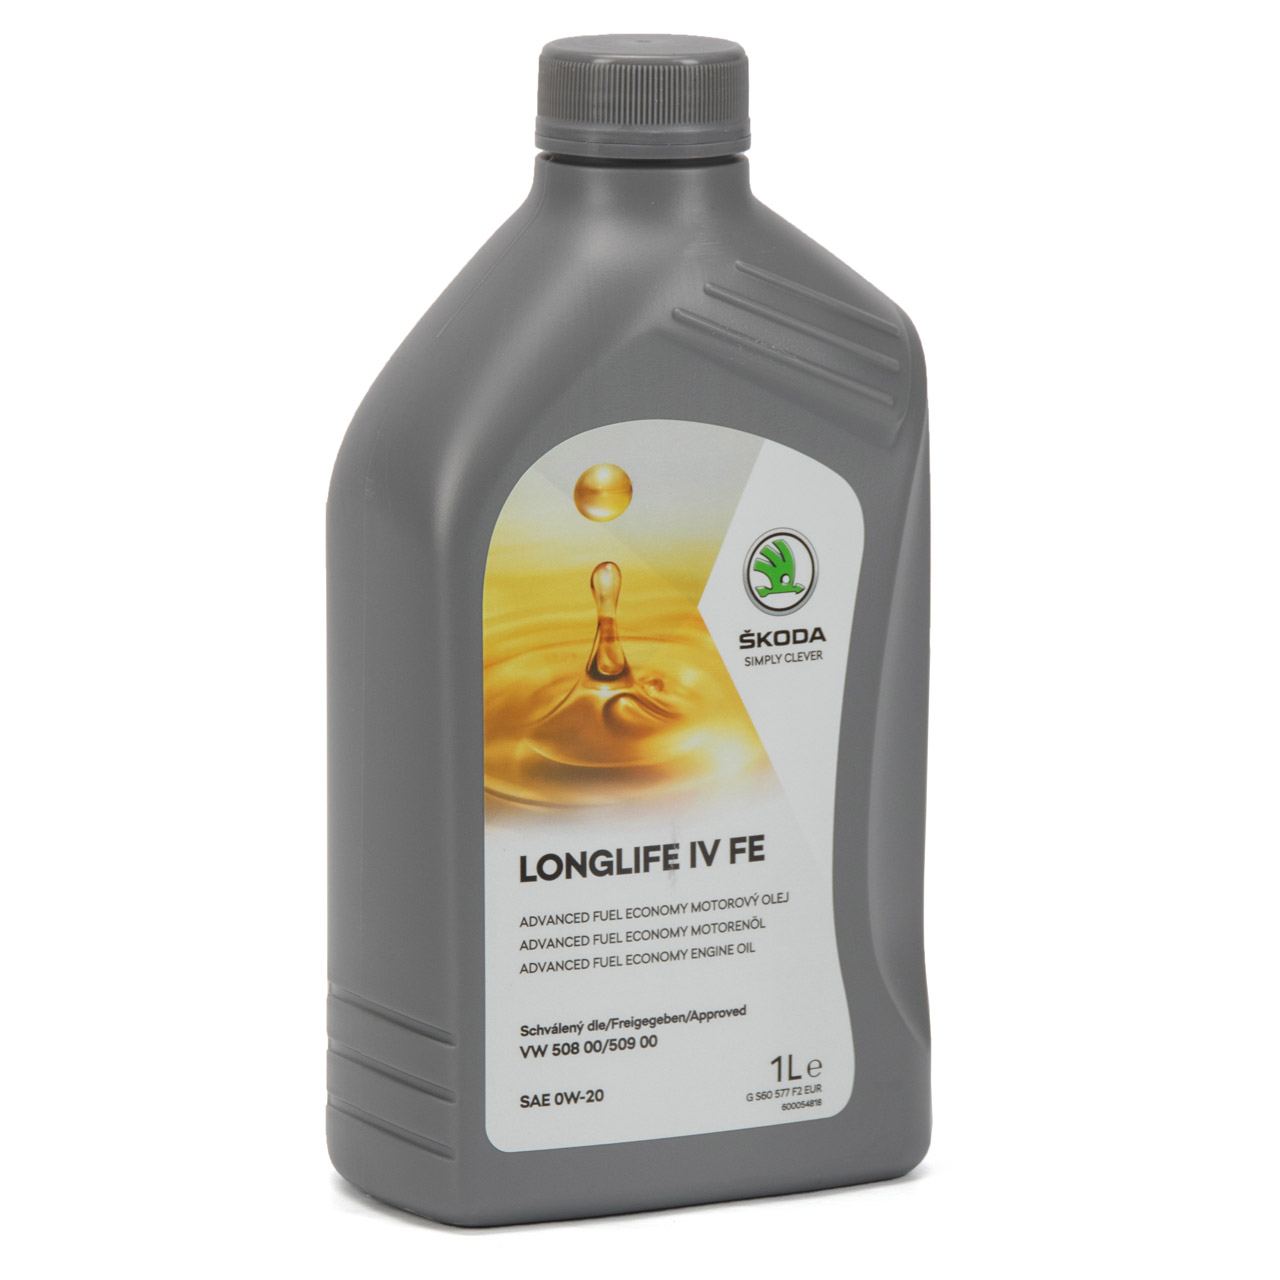 4L 4 Liter ORIGINAL SKODA Motoröl Öl 0W20 LONGLIFE IV FE 508.00 509.00 GS60577F2